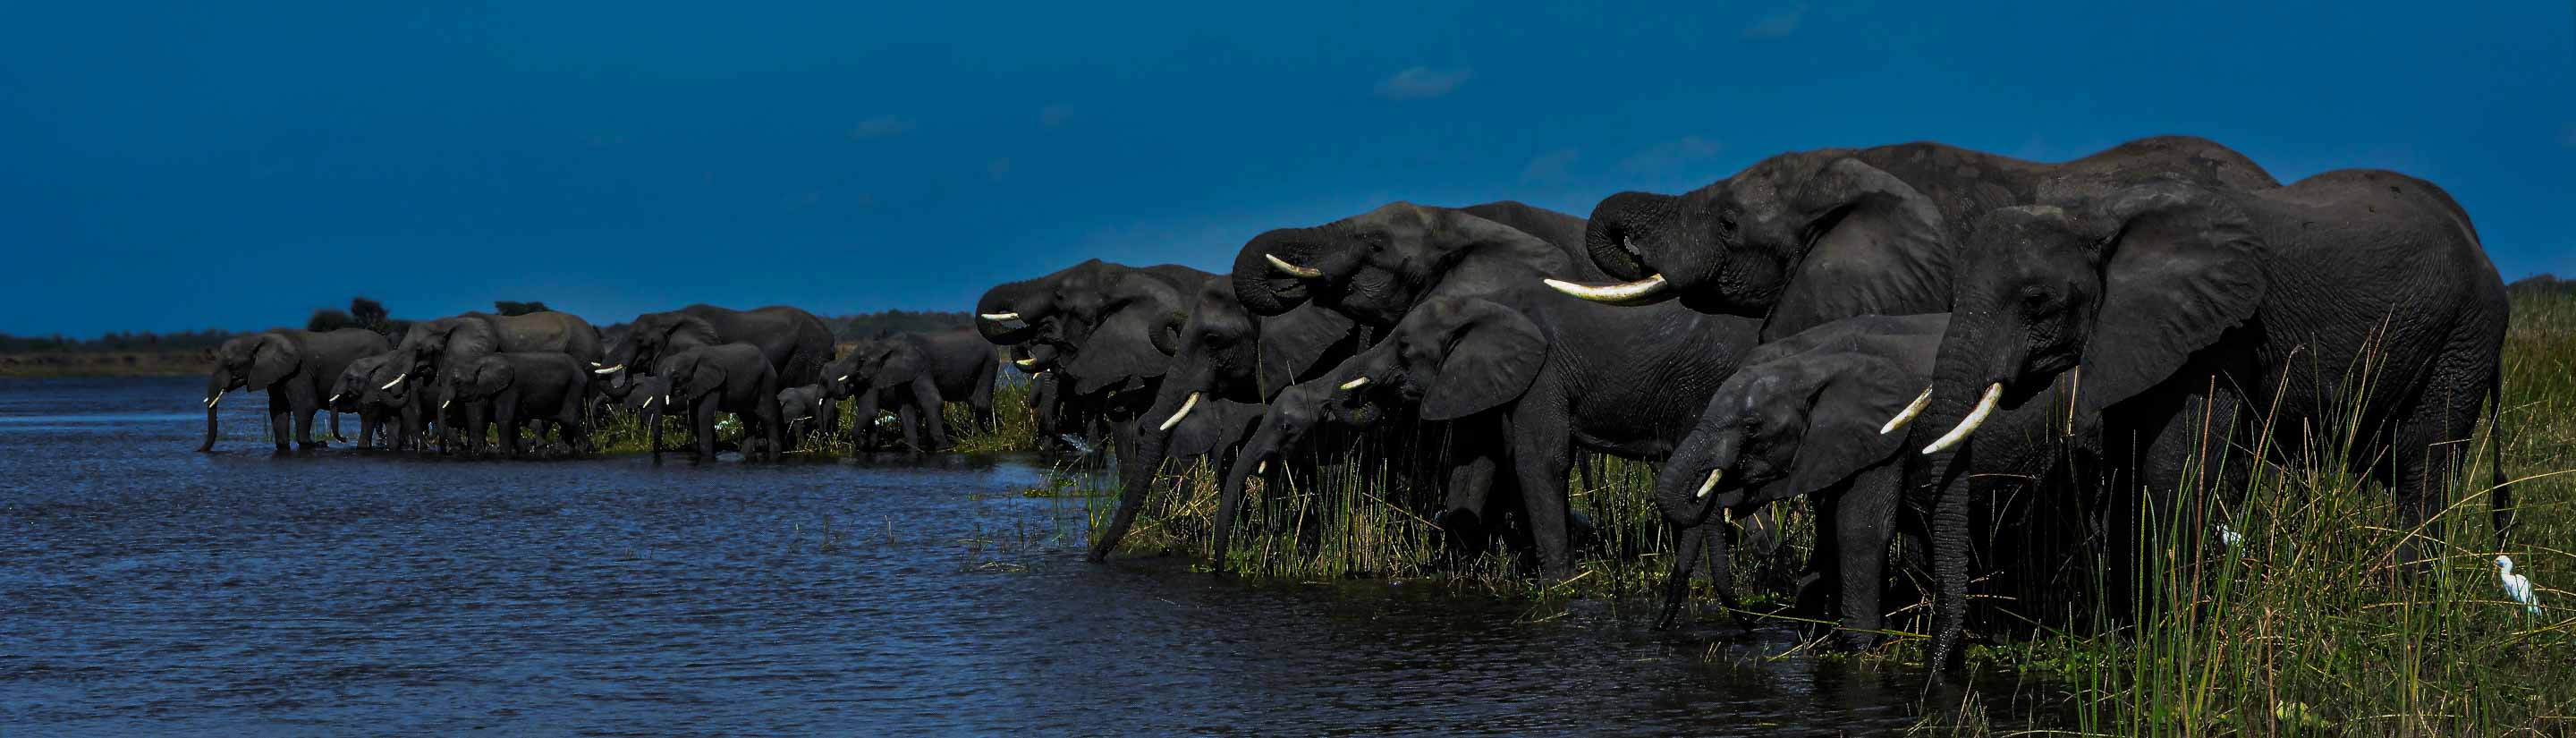 Elefantenherde am Shire Fluss im Liwonde Nationalpark in Malawi.